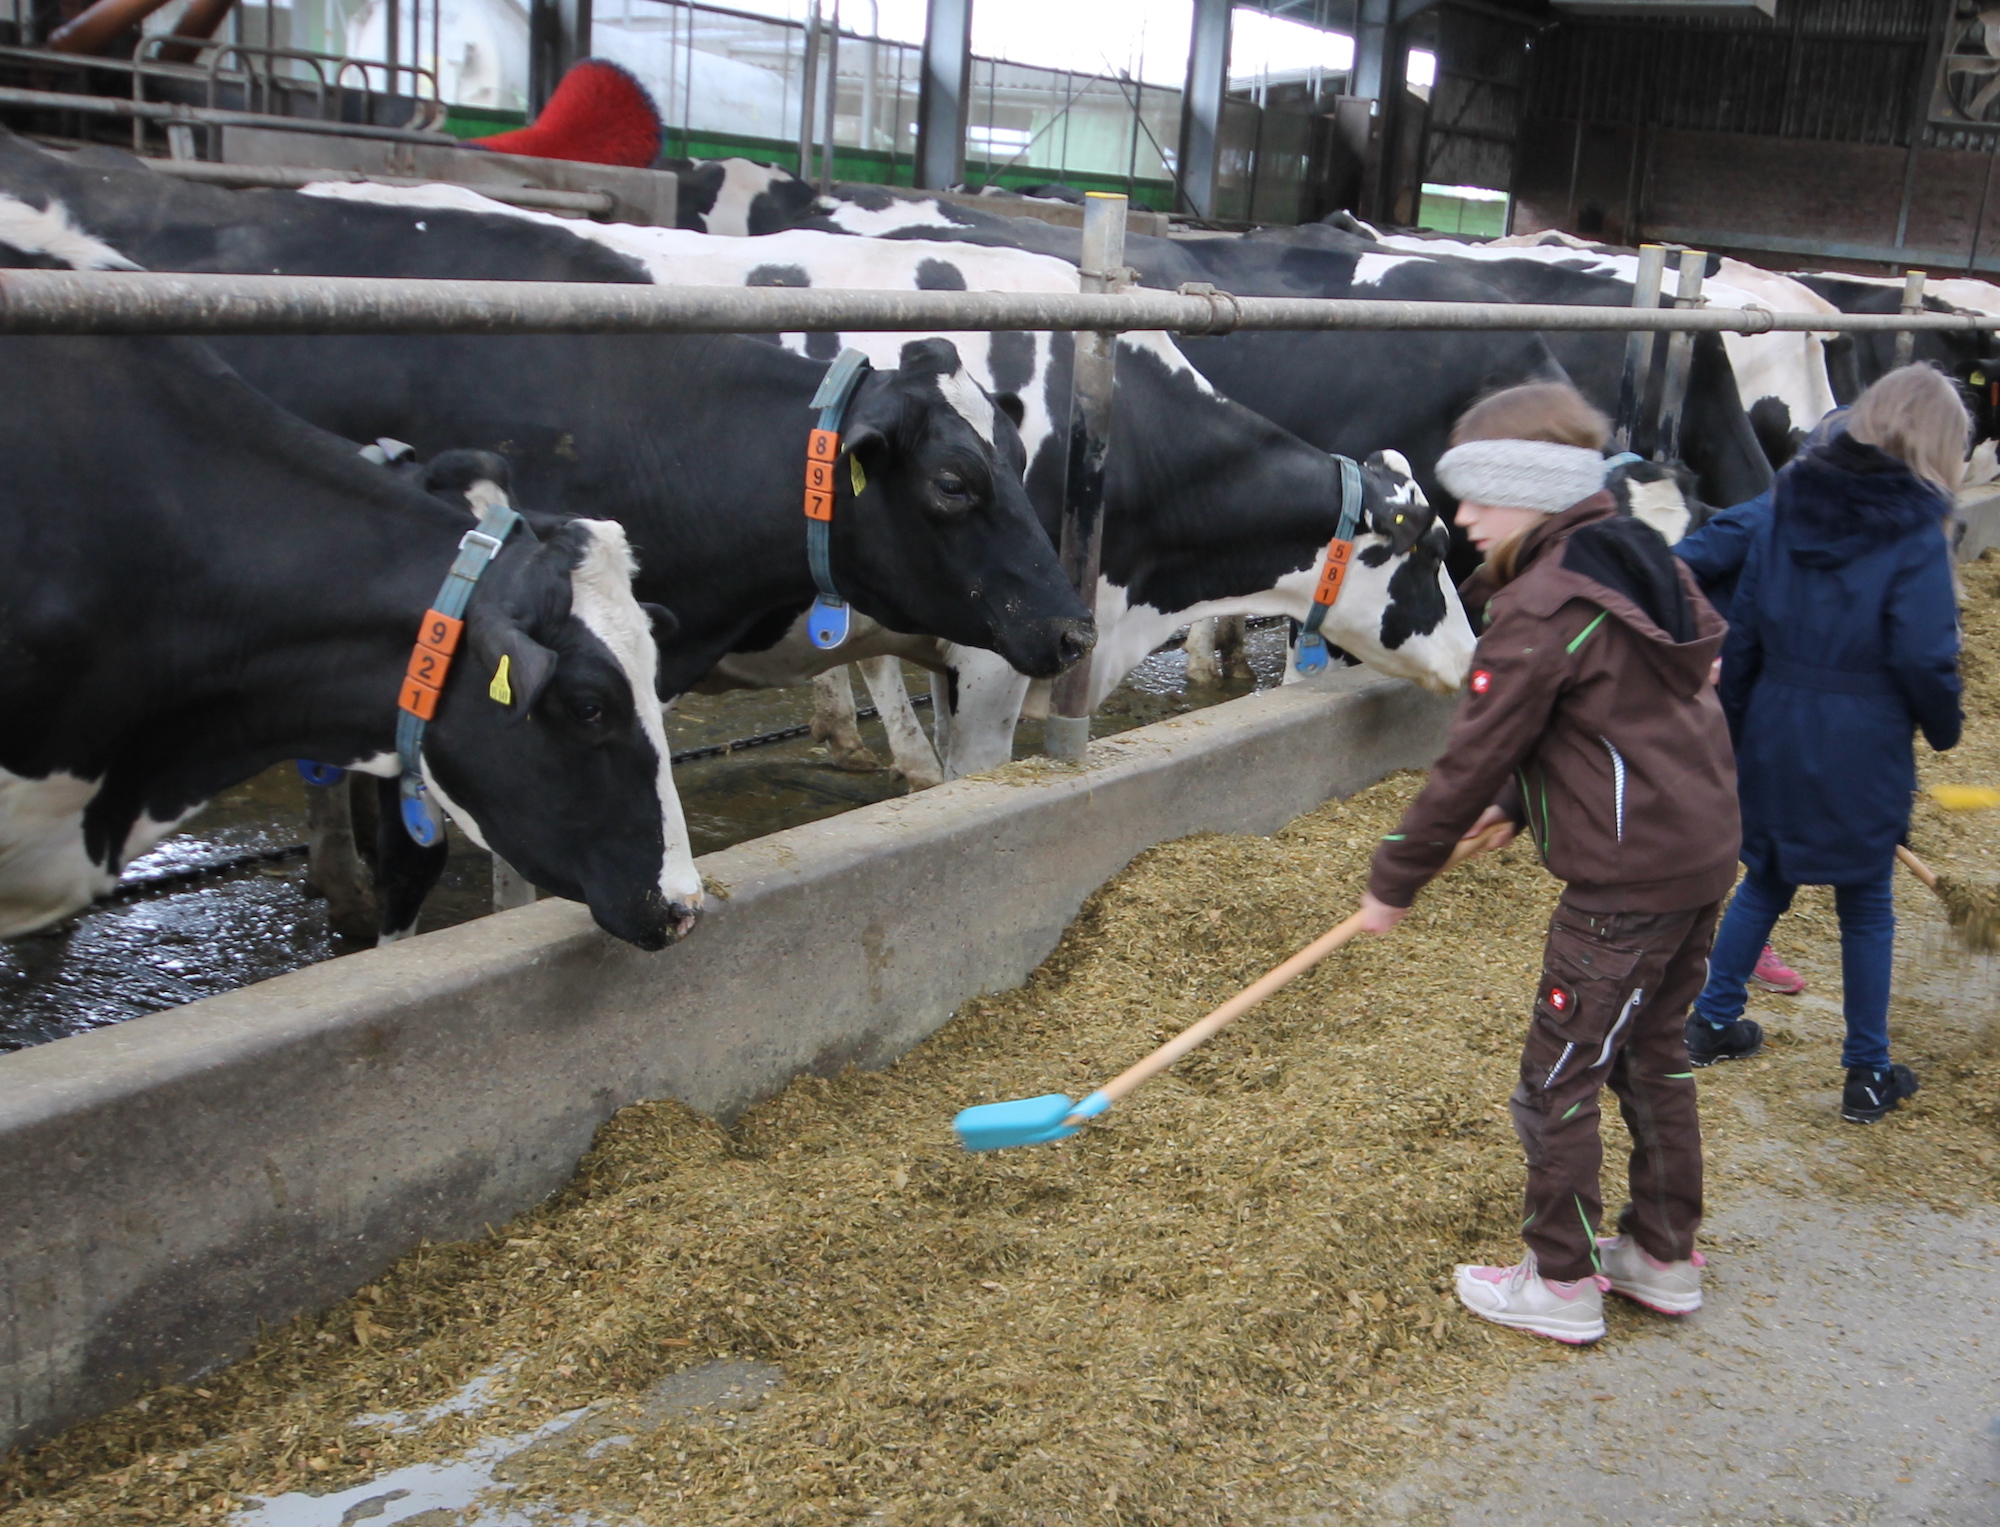 Kühe füttern war das Highlight der Aktion der KLJB Kempen. (c) Kathrin Albrecht